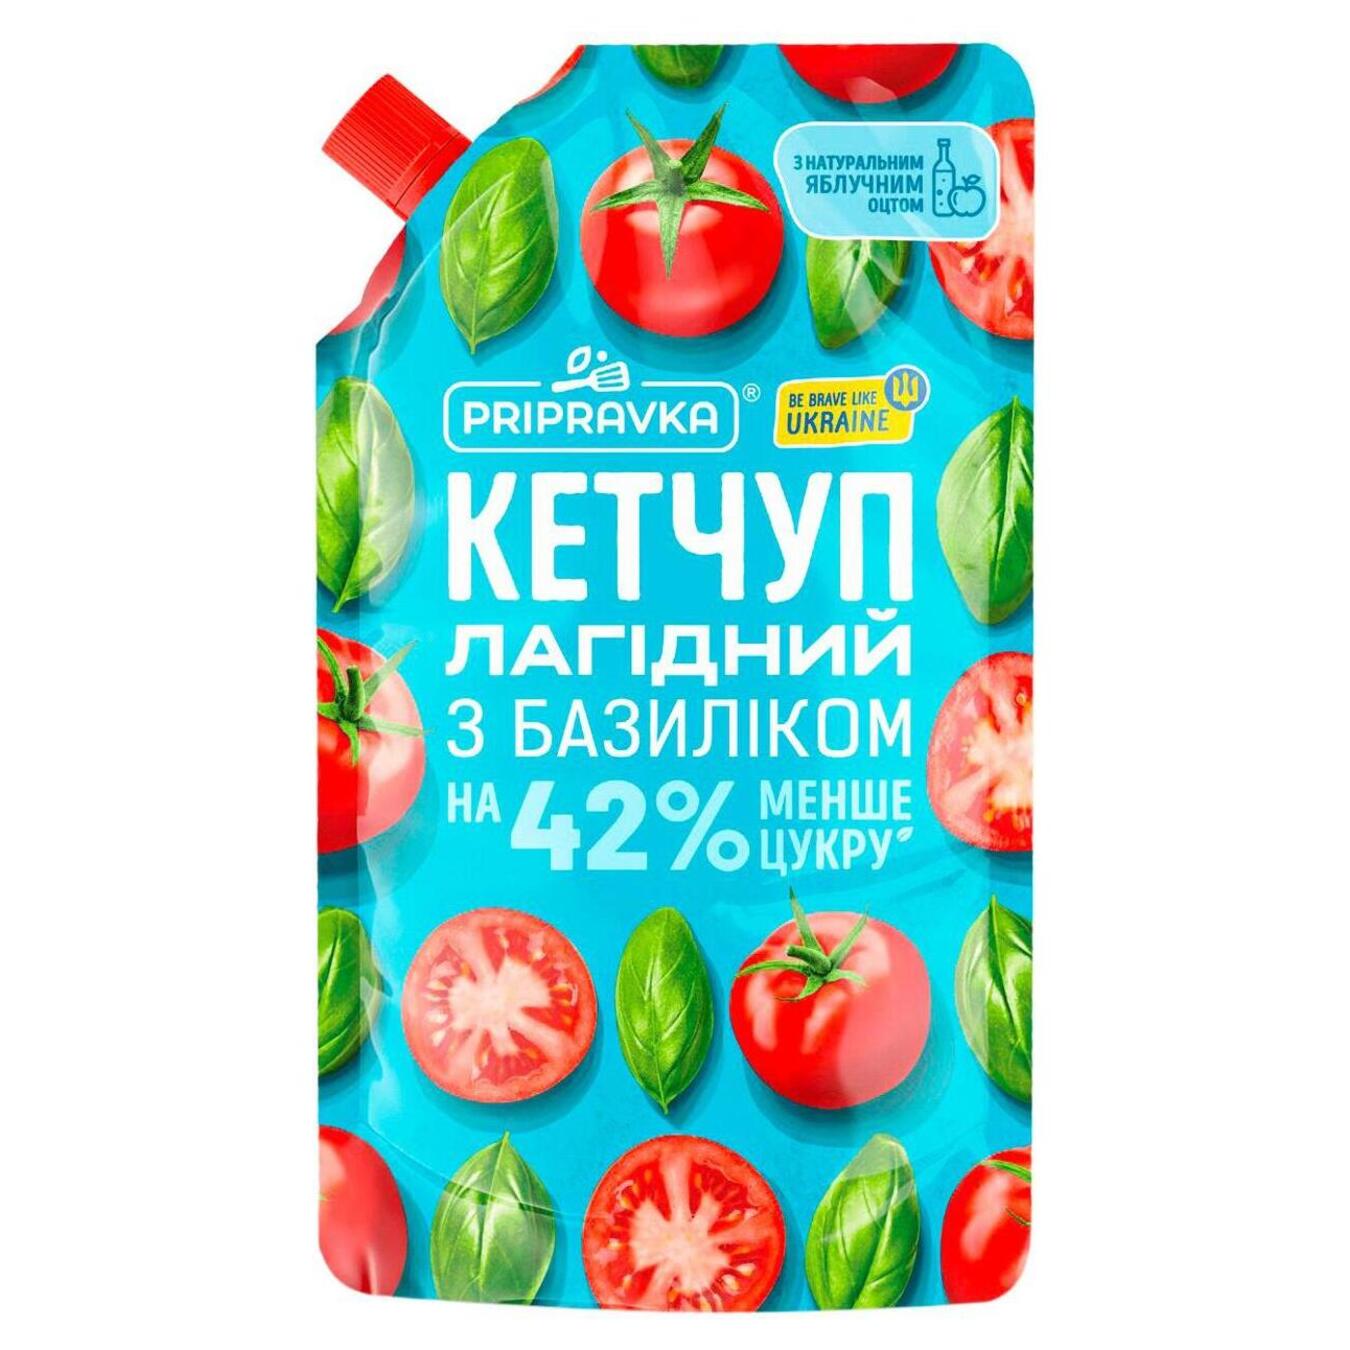 Pripravka ketchup pasteurized Mild with basil doi-pack 250g